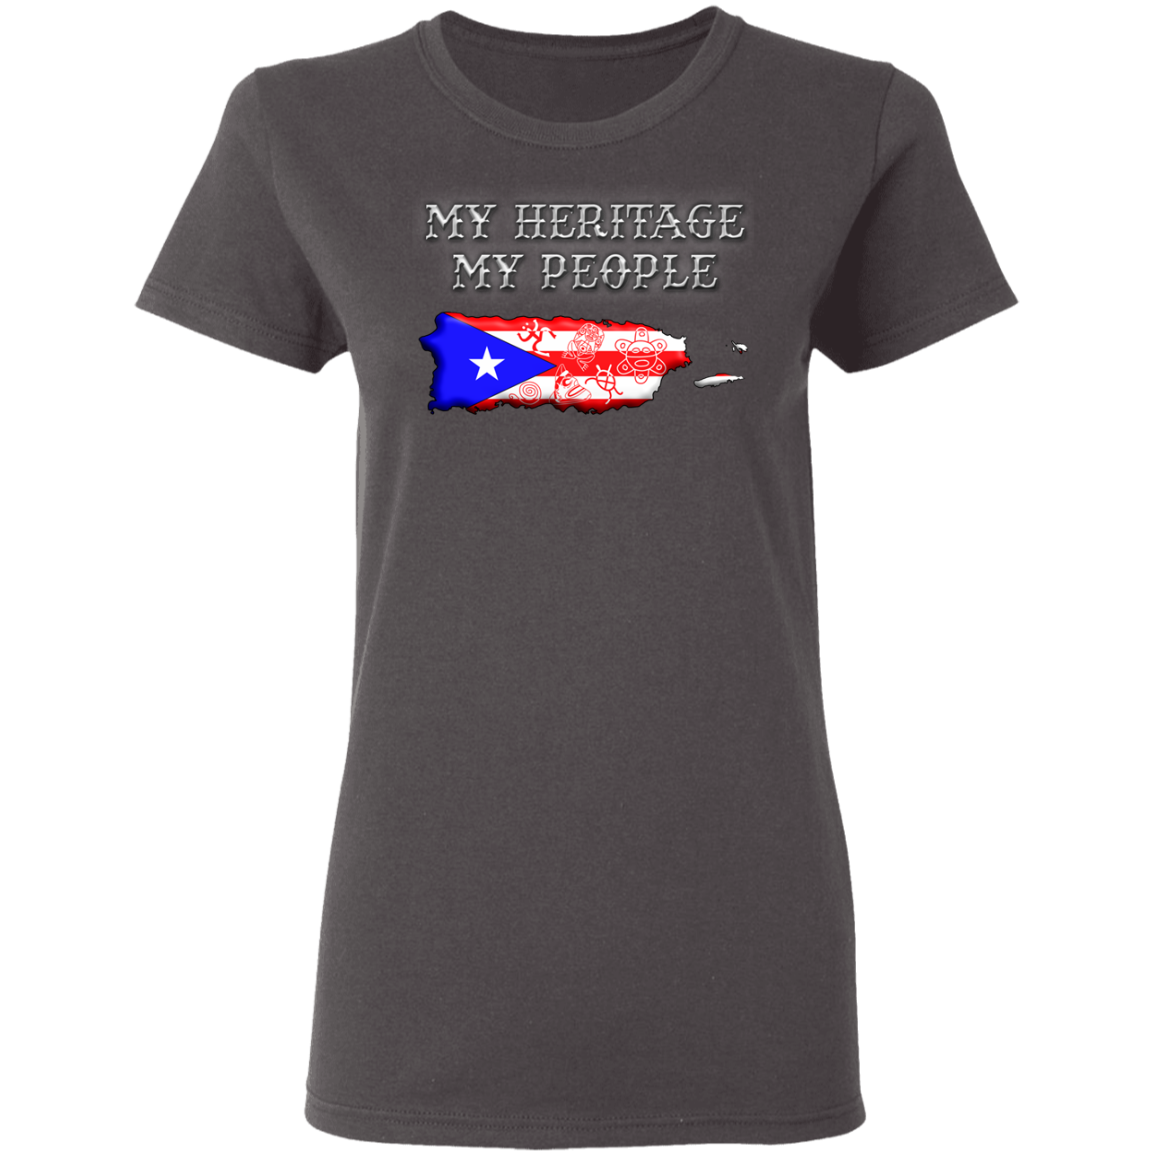 My Heritage / People 5.3 oz. T-Shirt